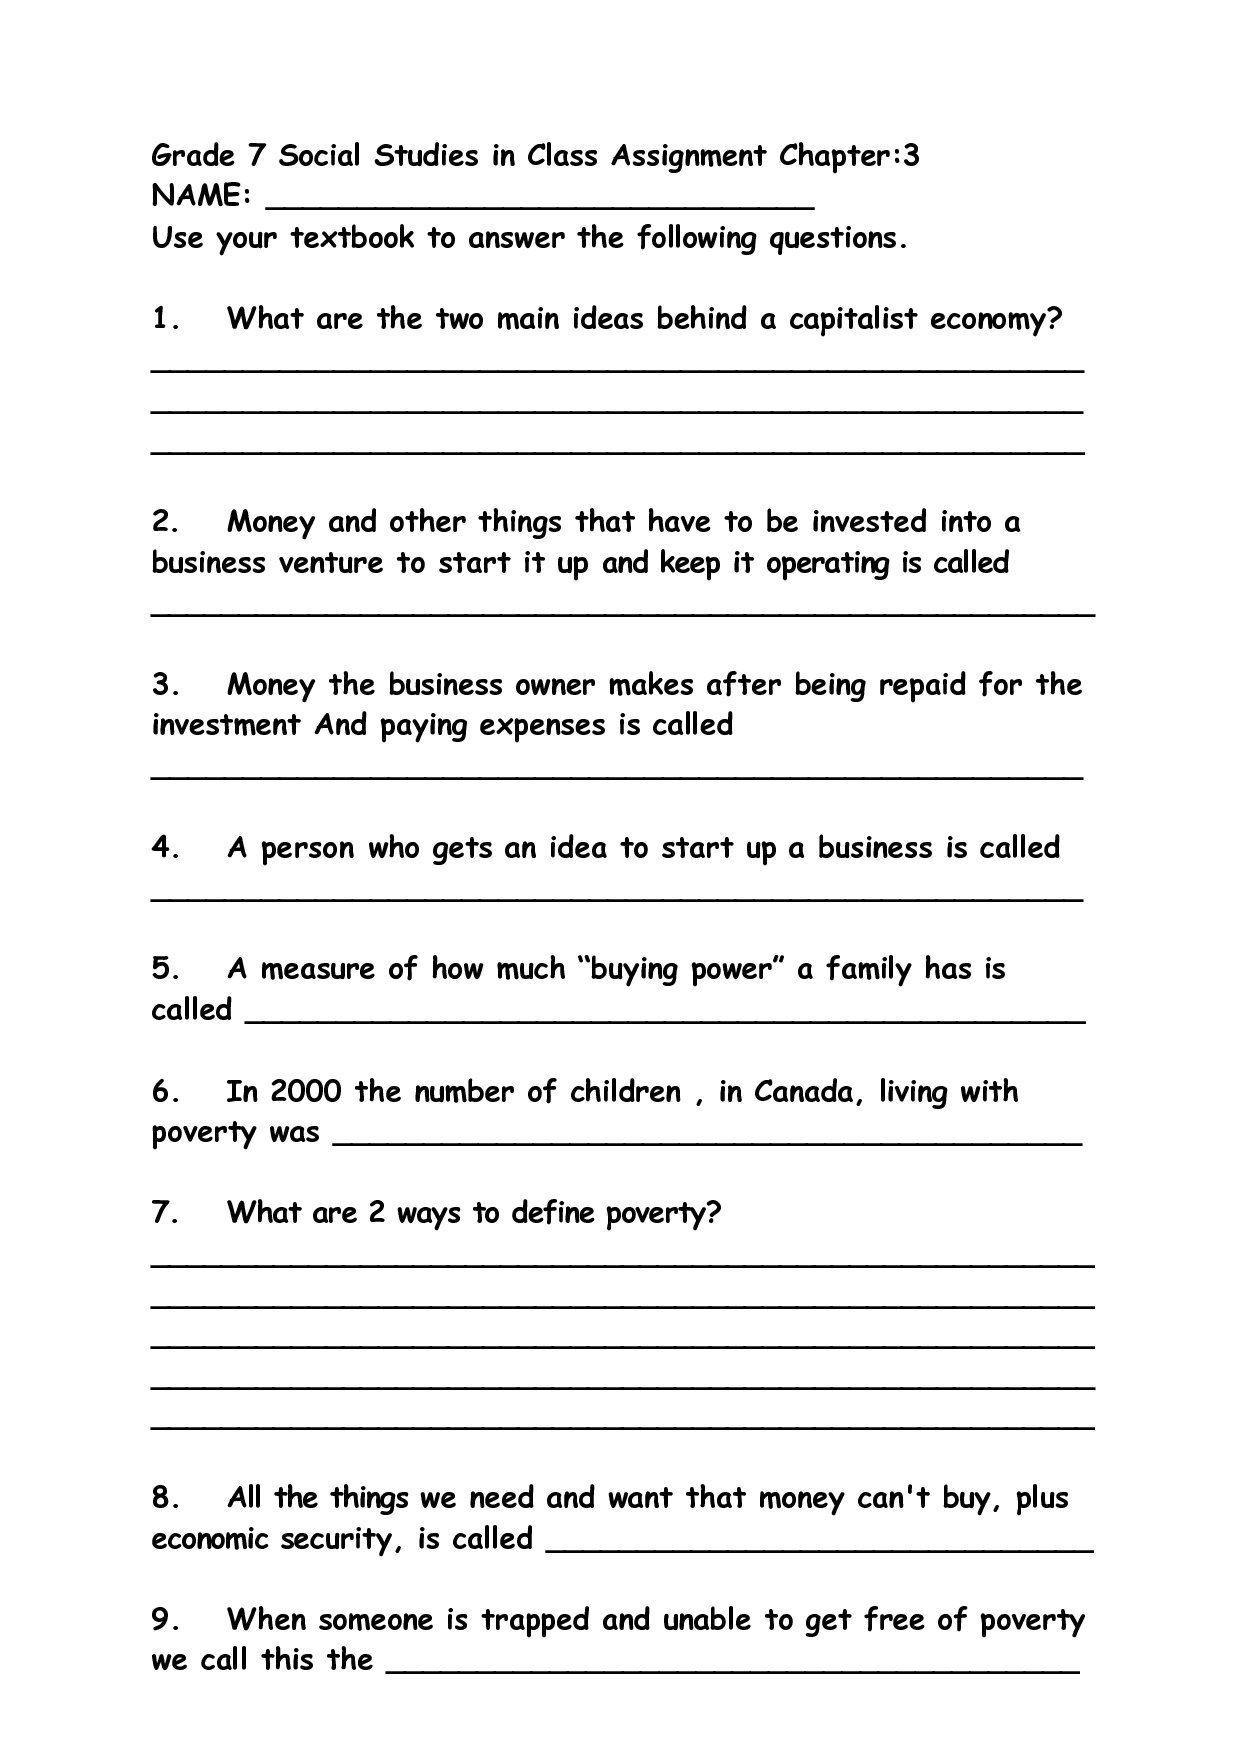 17 Best Images of 8 Grade Social Studies Worksheets - Free ...